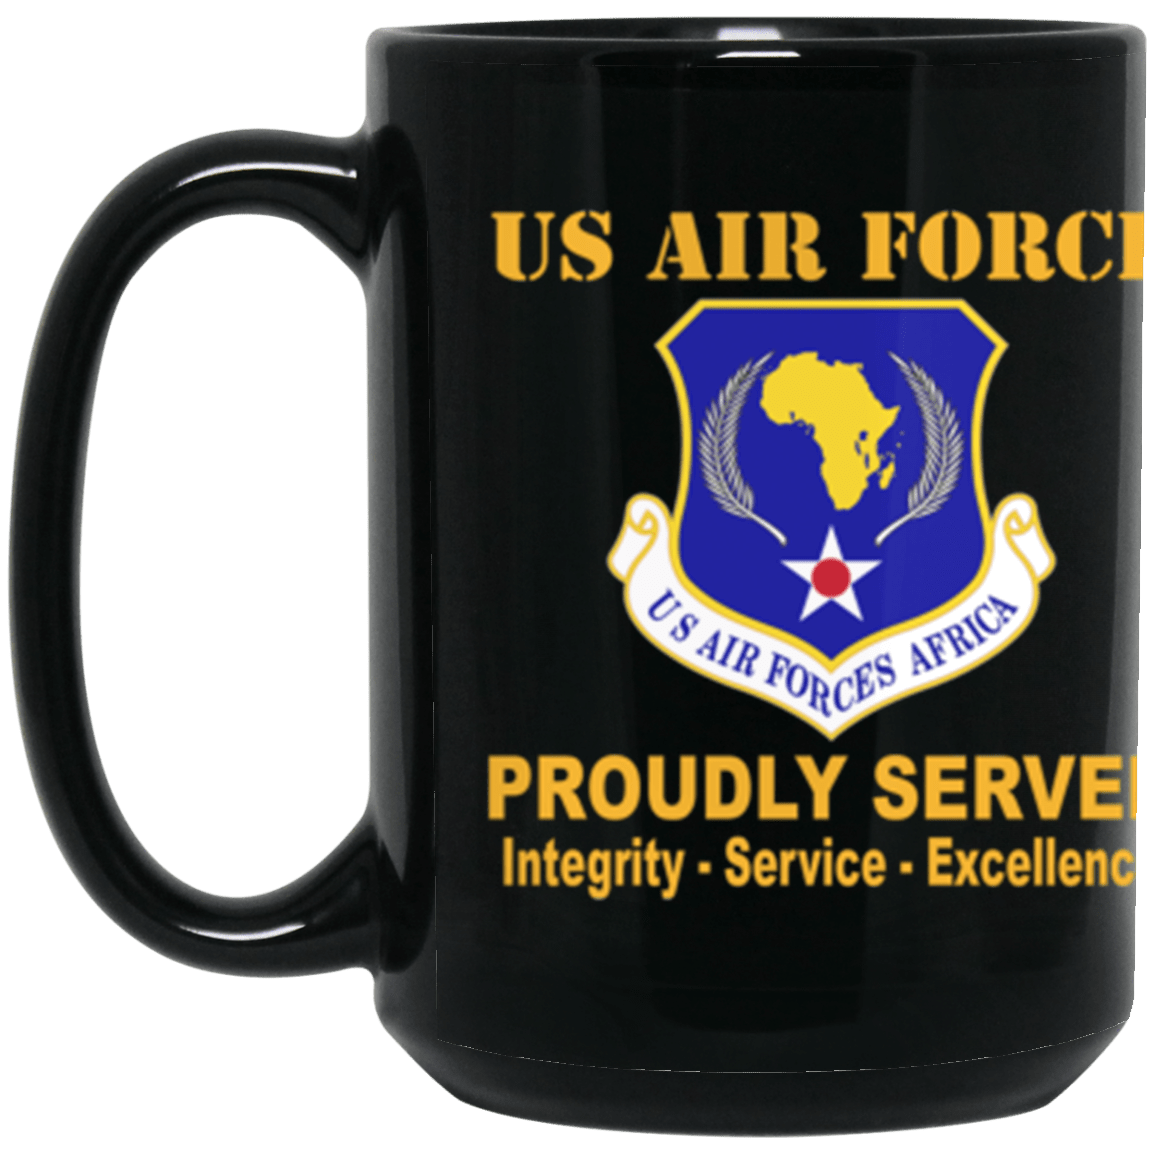 US Air Force Reserve Command Proudly Served Core Values 15 oz. Black Mug-Mug-USAF-Veterans Nation